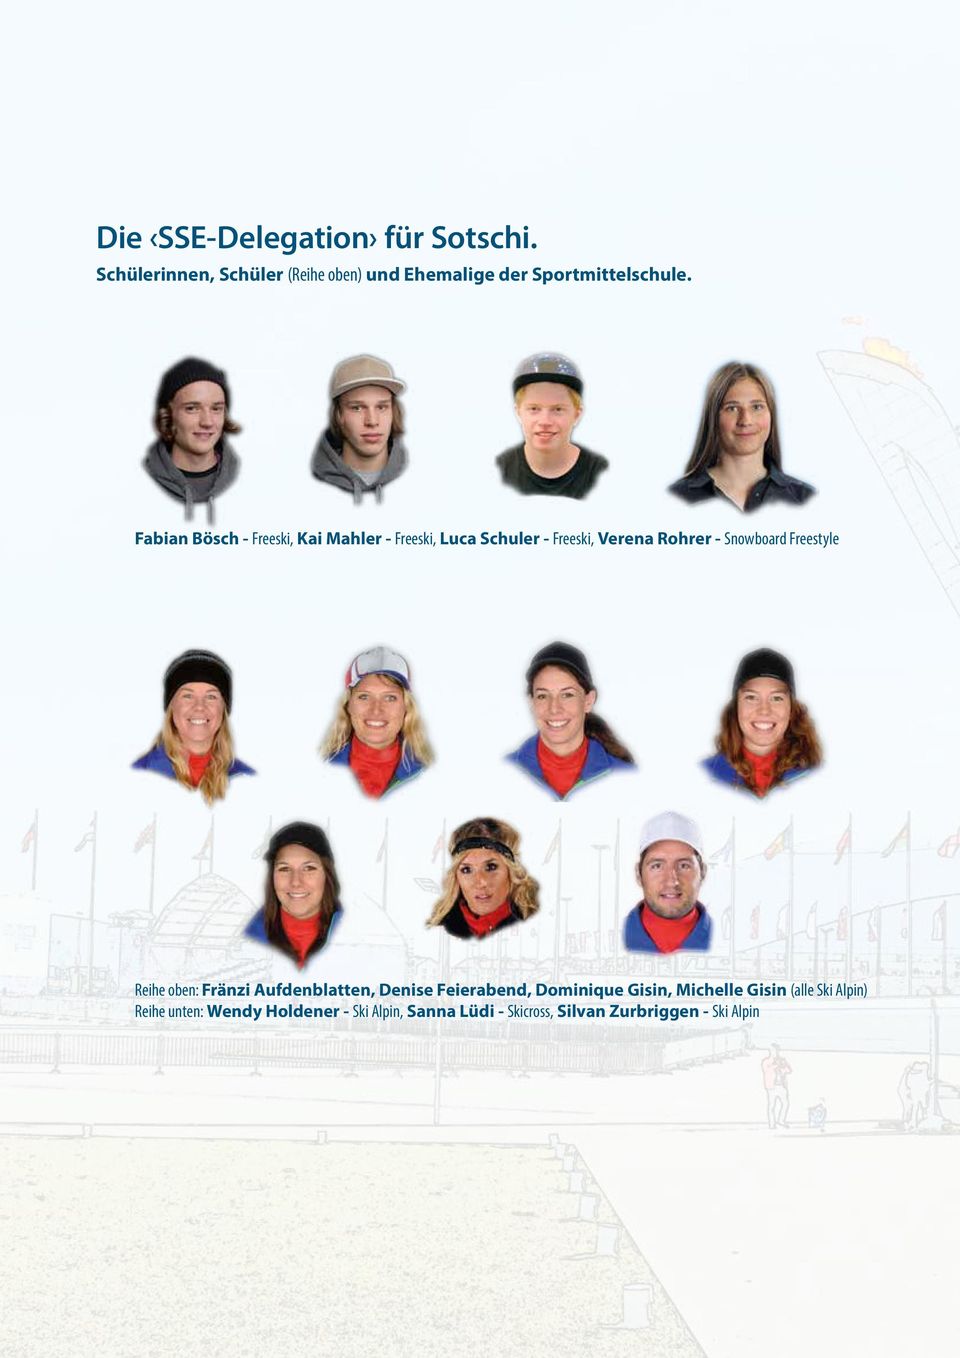 Fabian Bösch - Freeski, Kai Mahler - Freeski, Luca Schuler - Freeski, Verena Rohrer - Snowboard